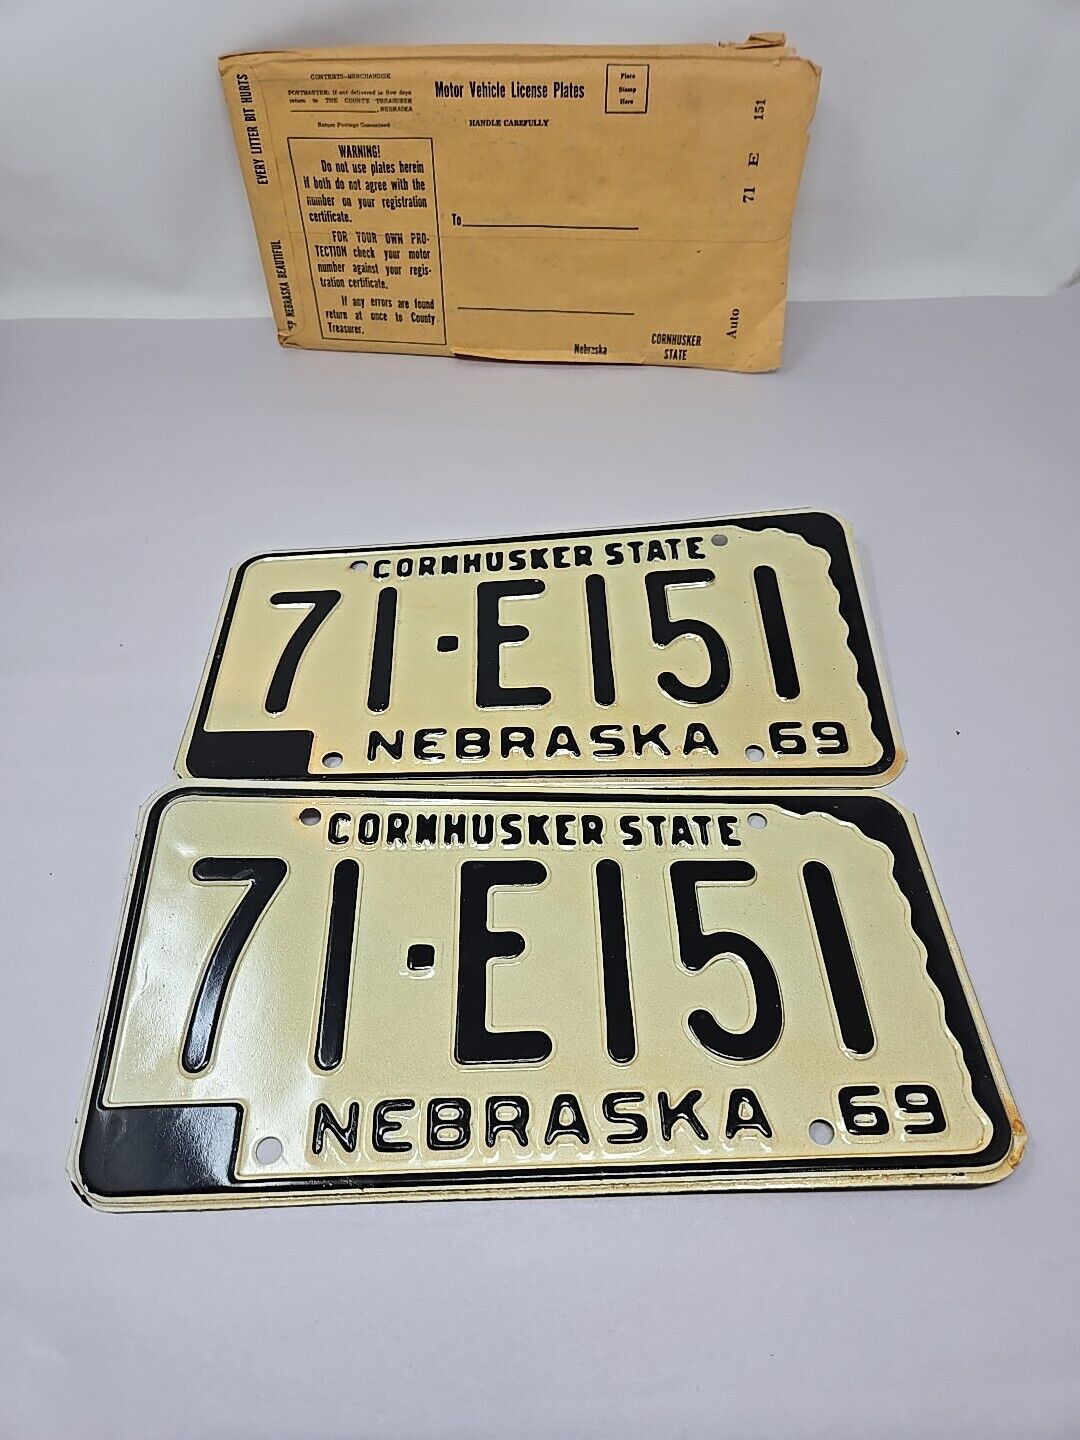 Pair Original Vintage 1969 Nebraska Automobile License 71-E151